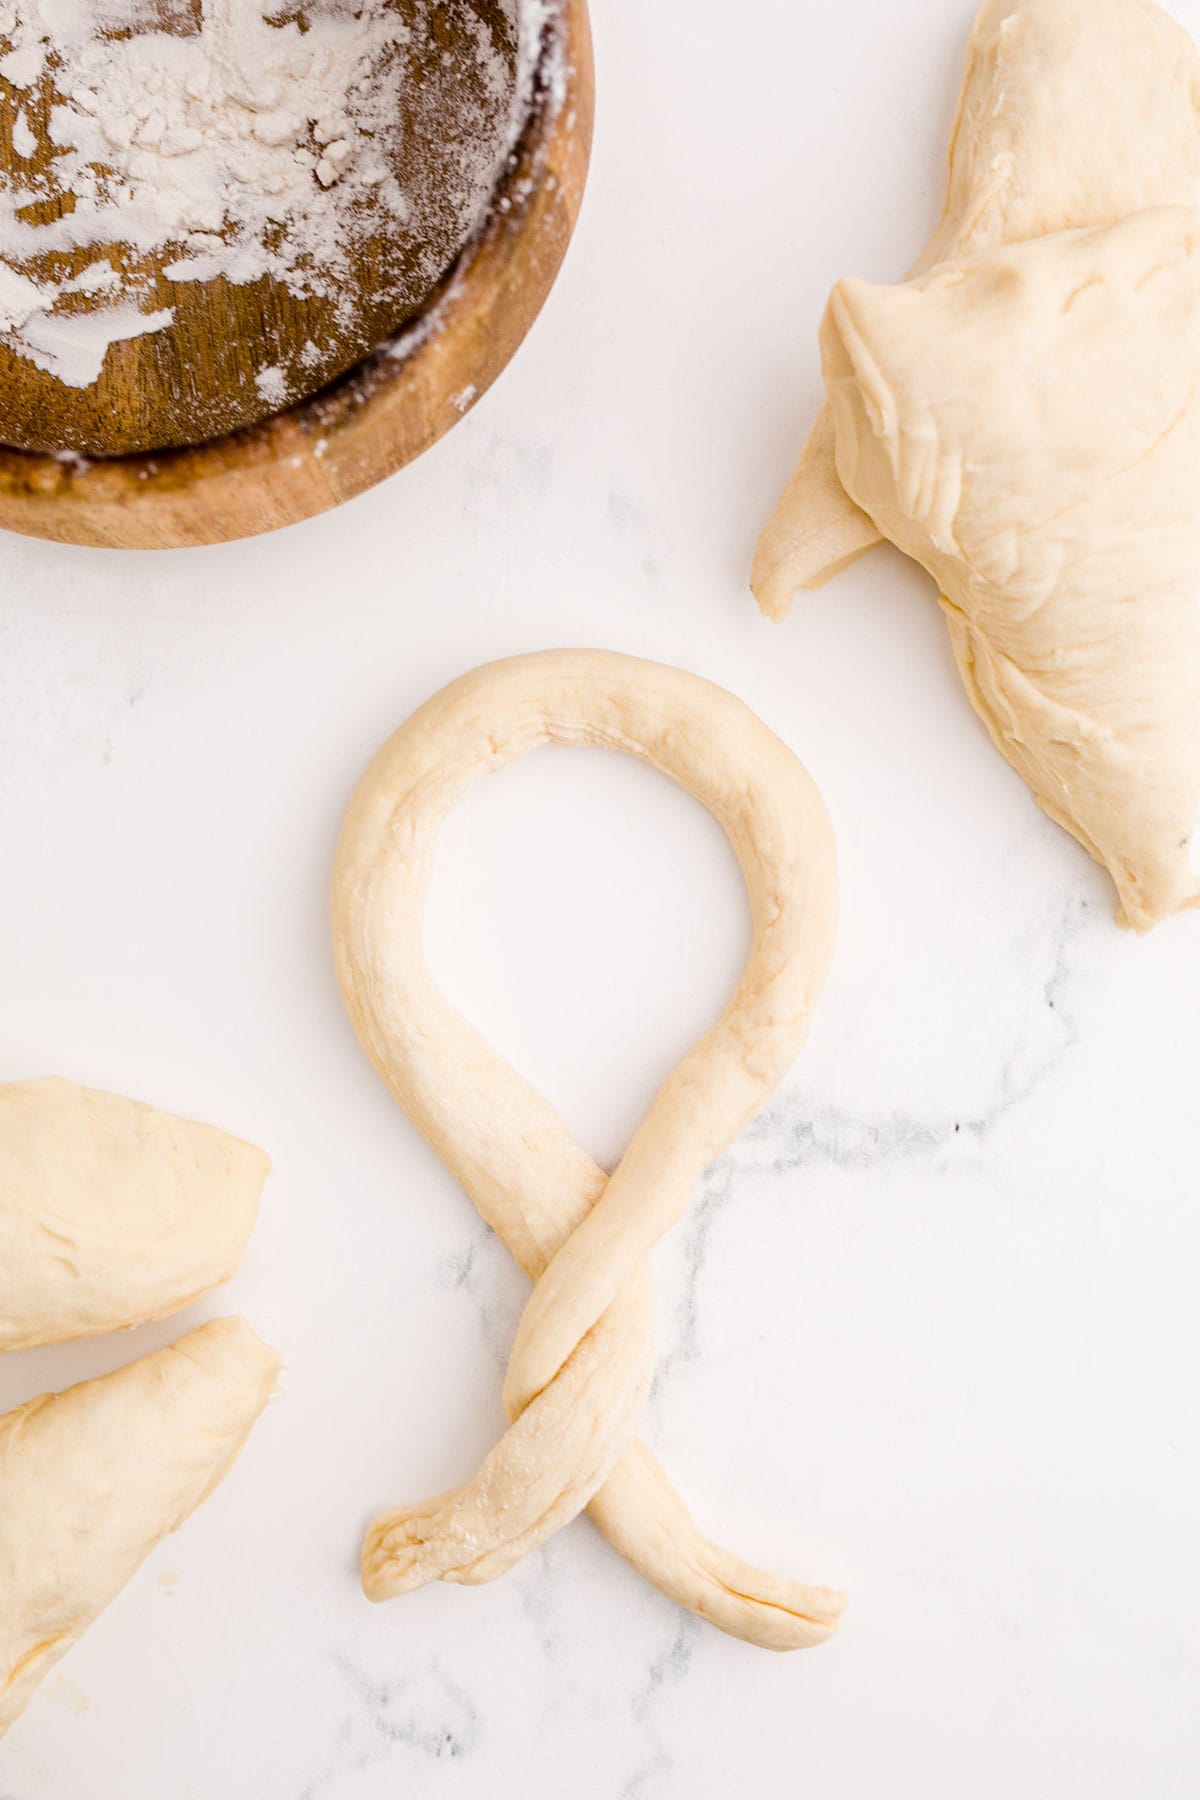 a piece of dough twisted to form a shape of a pretzel